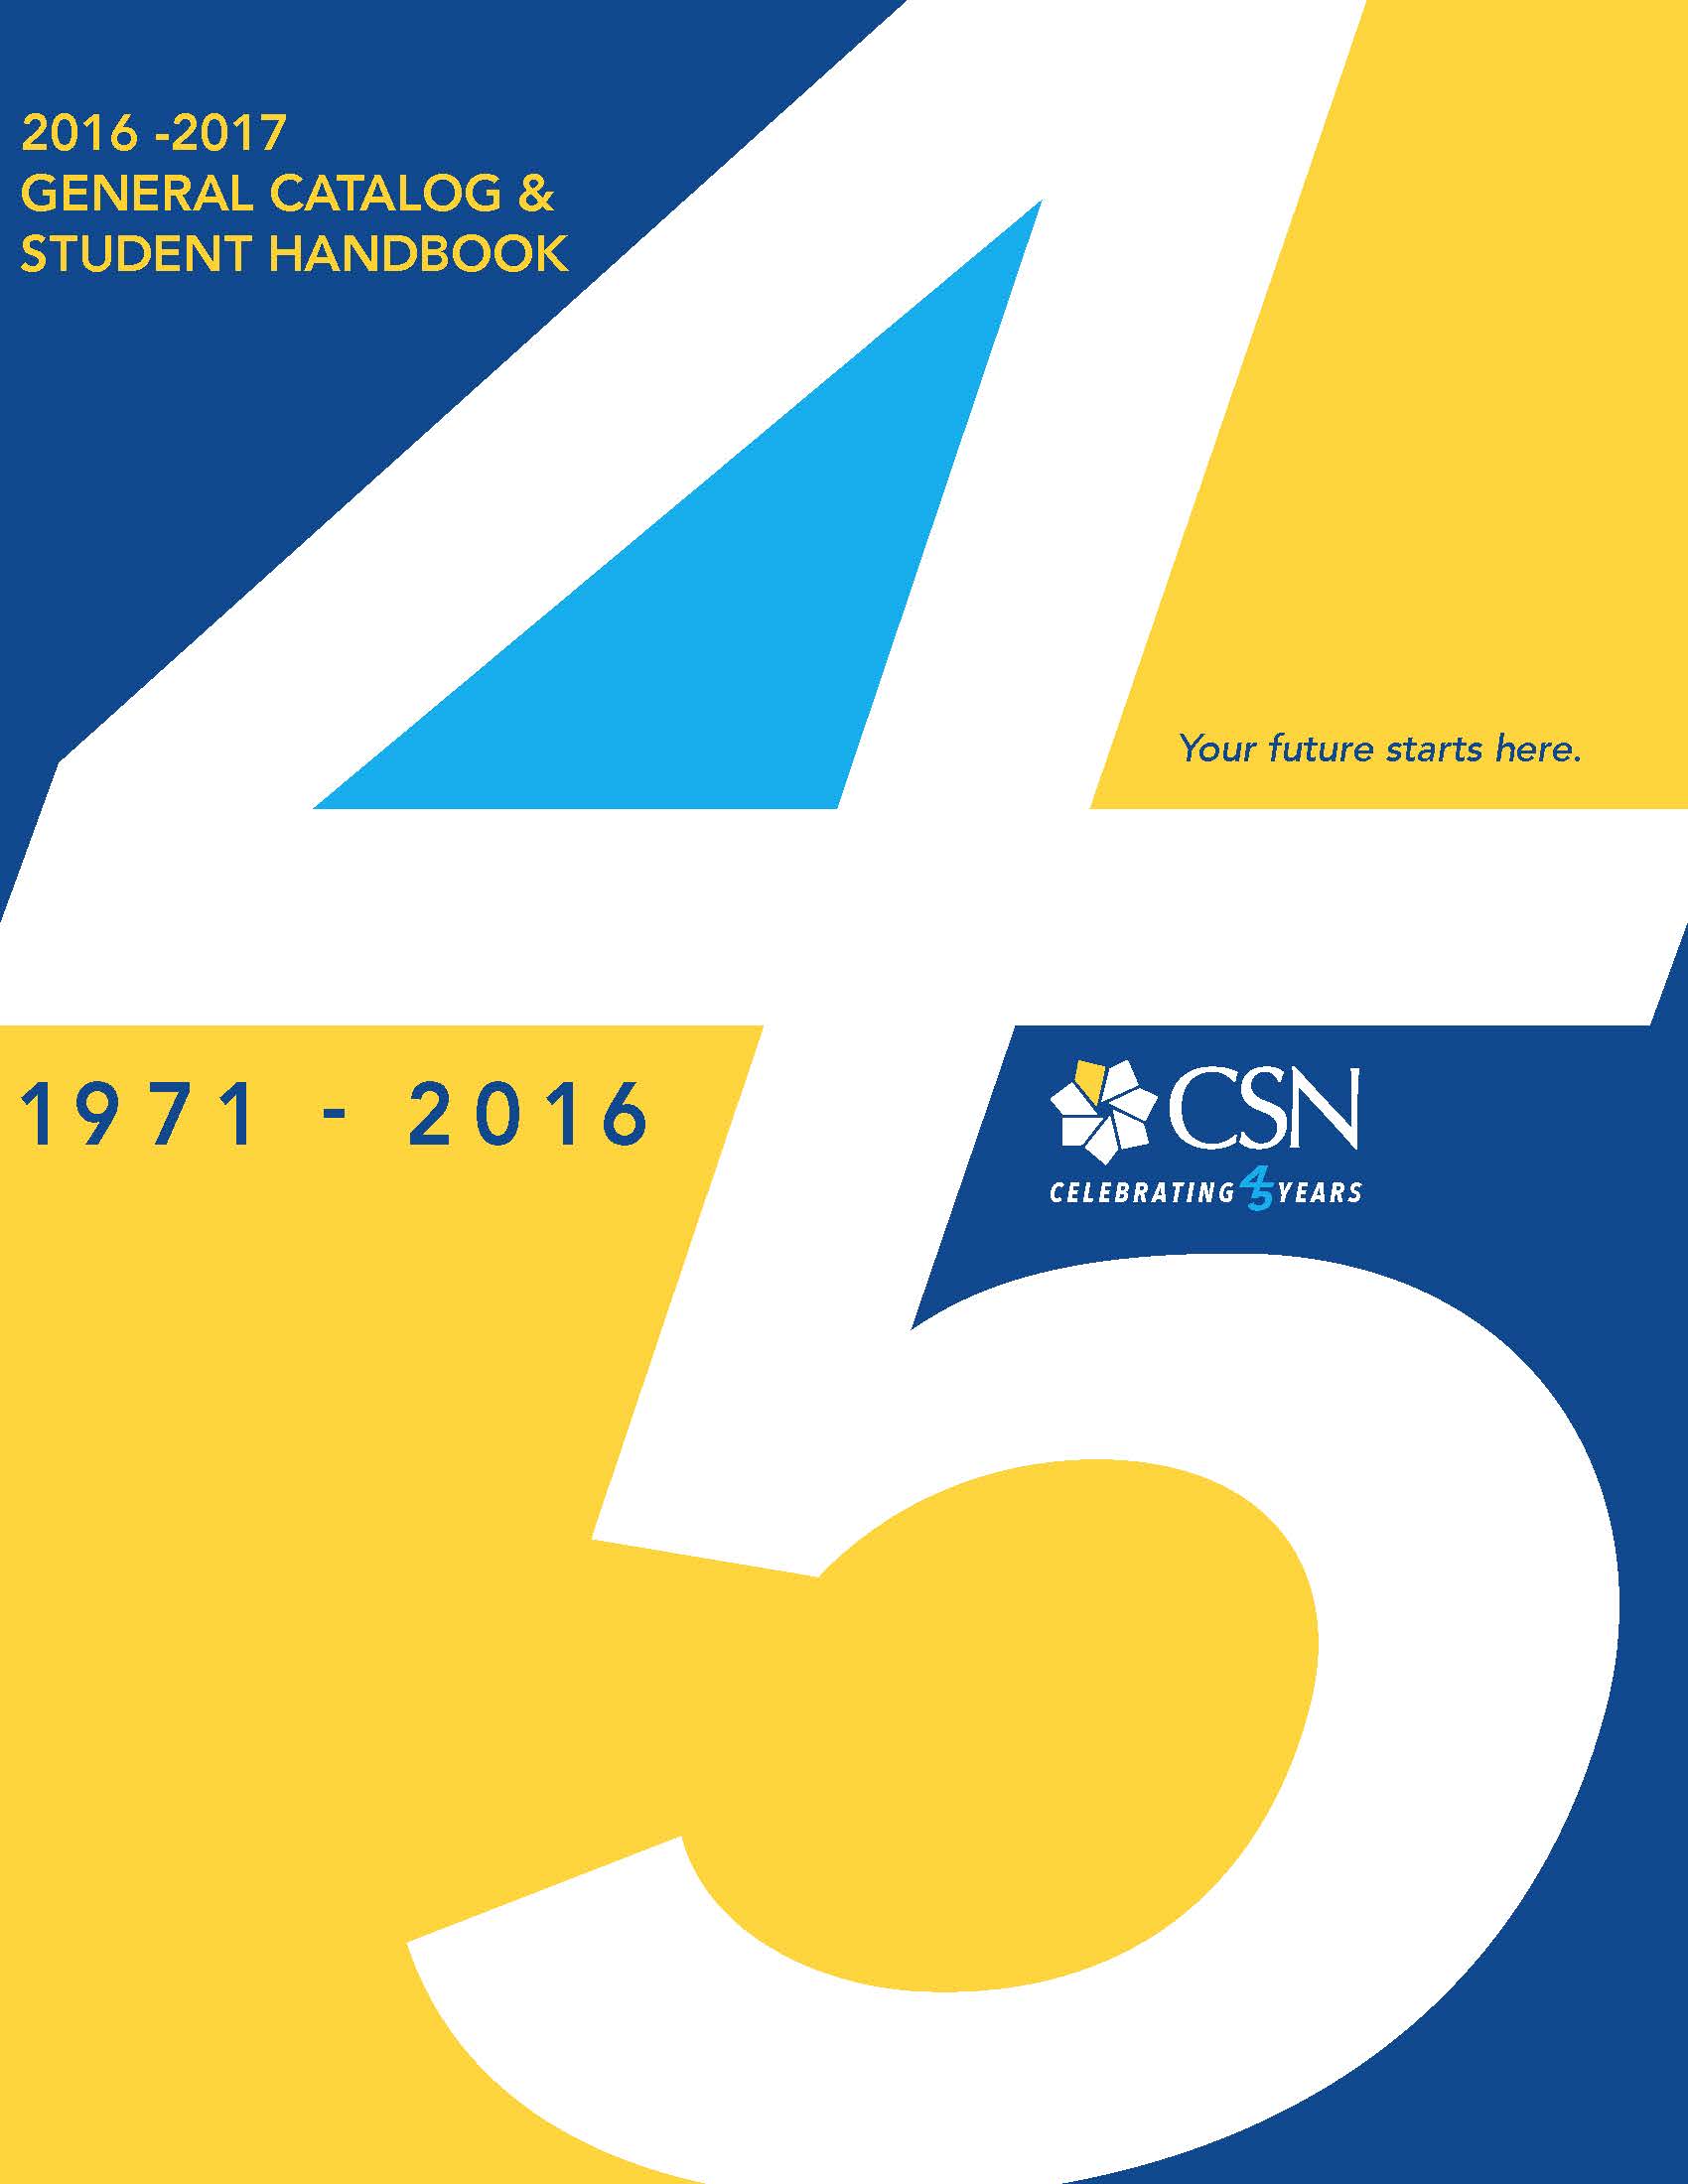 2016-2017 General Catalog and Student Handbook